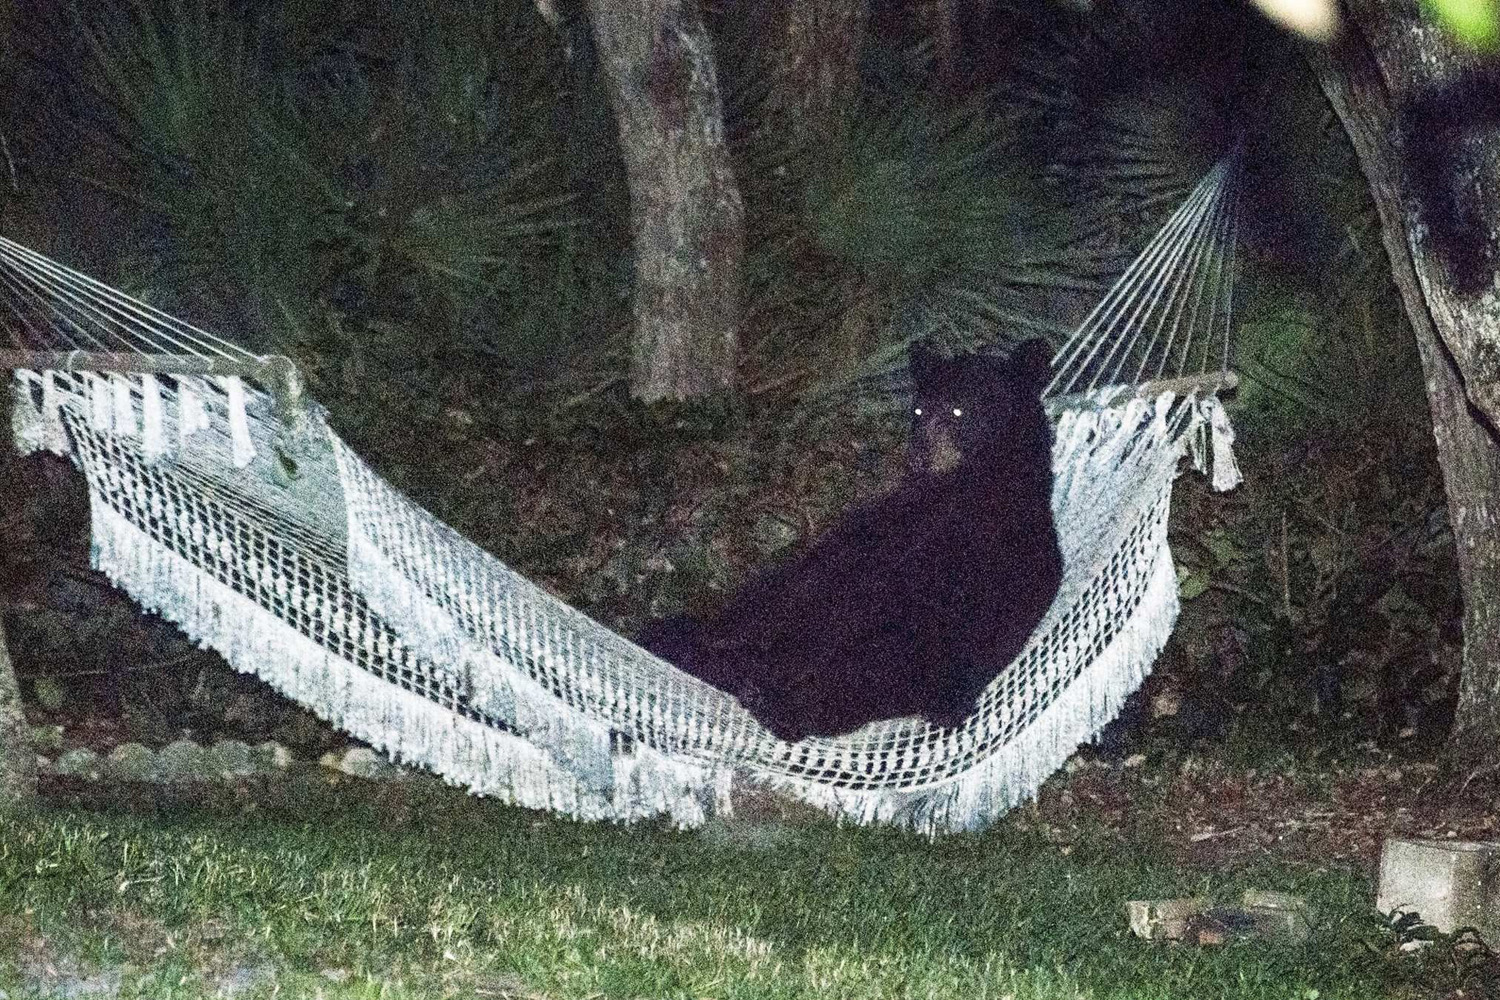 A black bear lies on a hammock at a residential back yard in Daytona Beach Florida